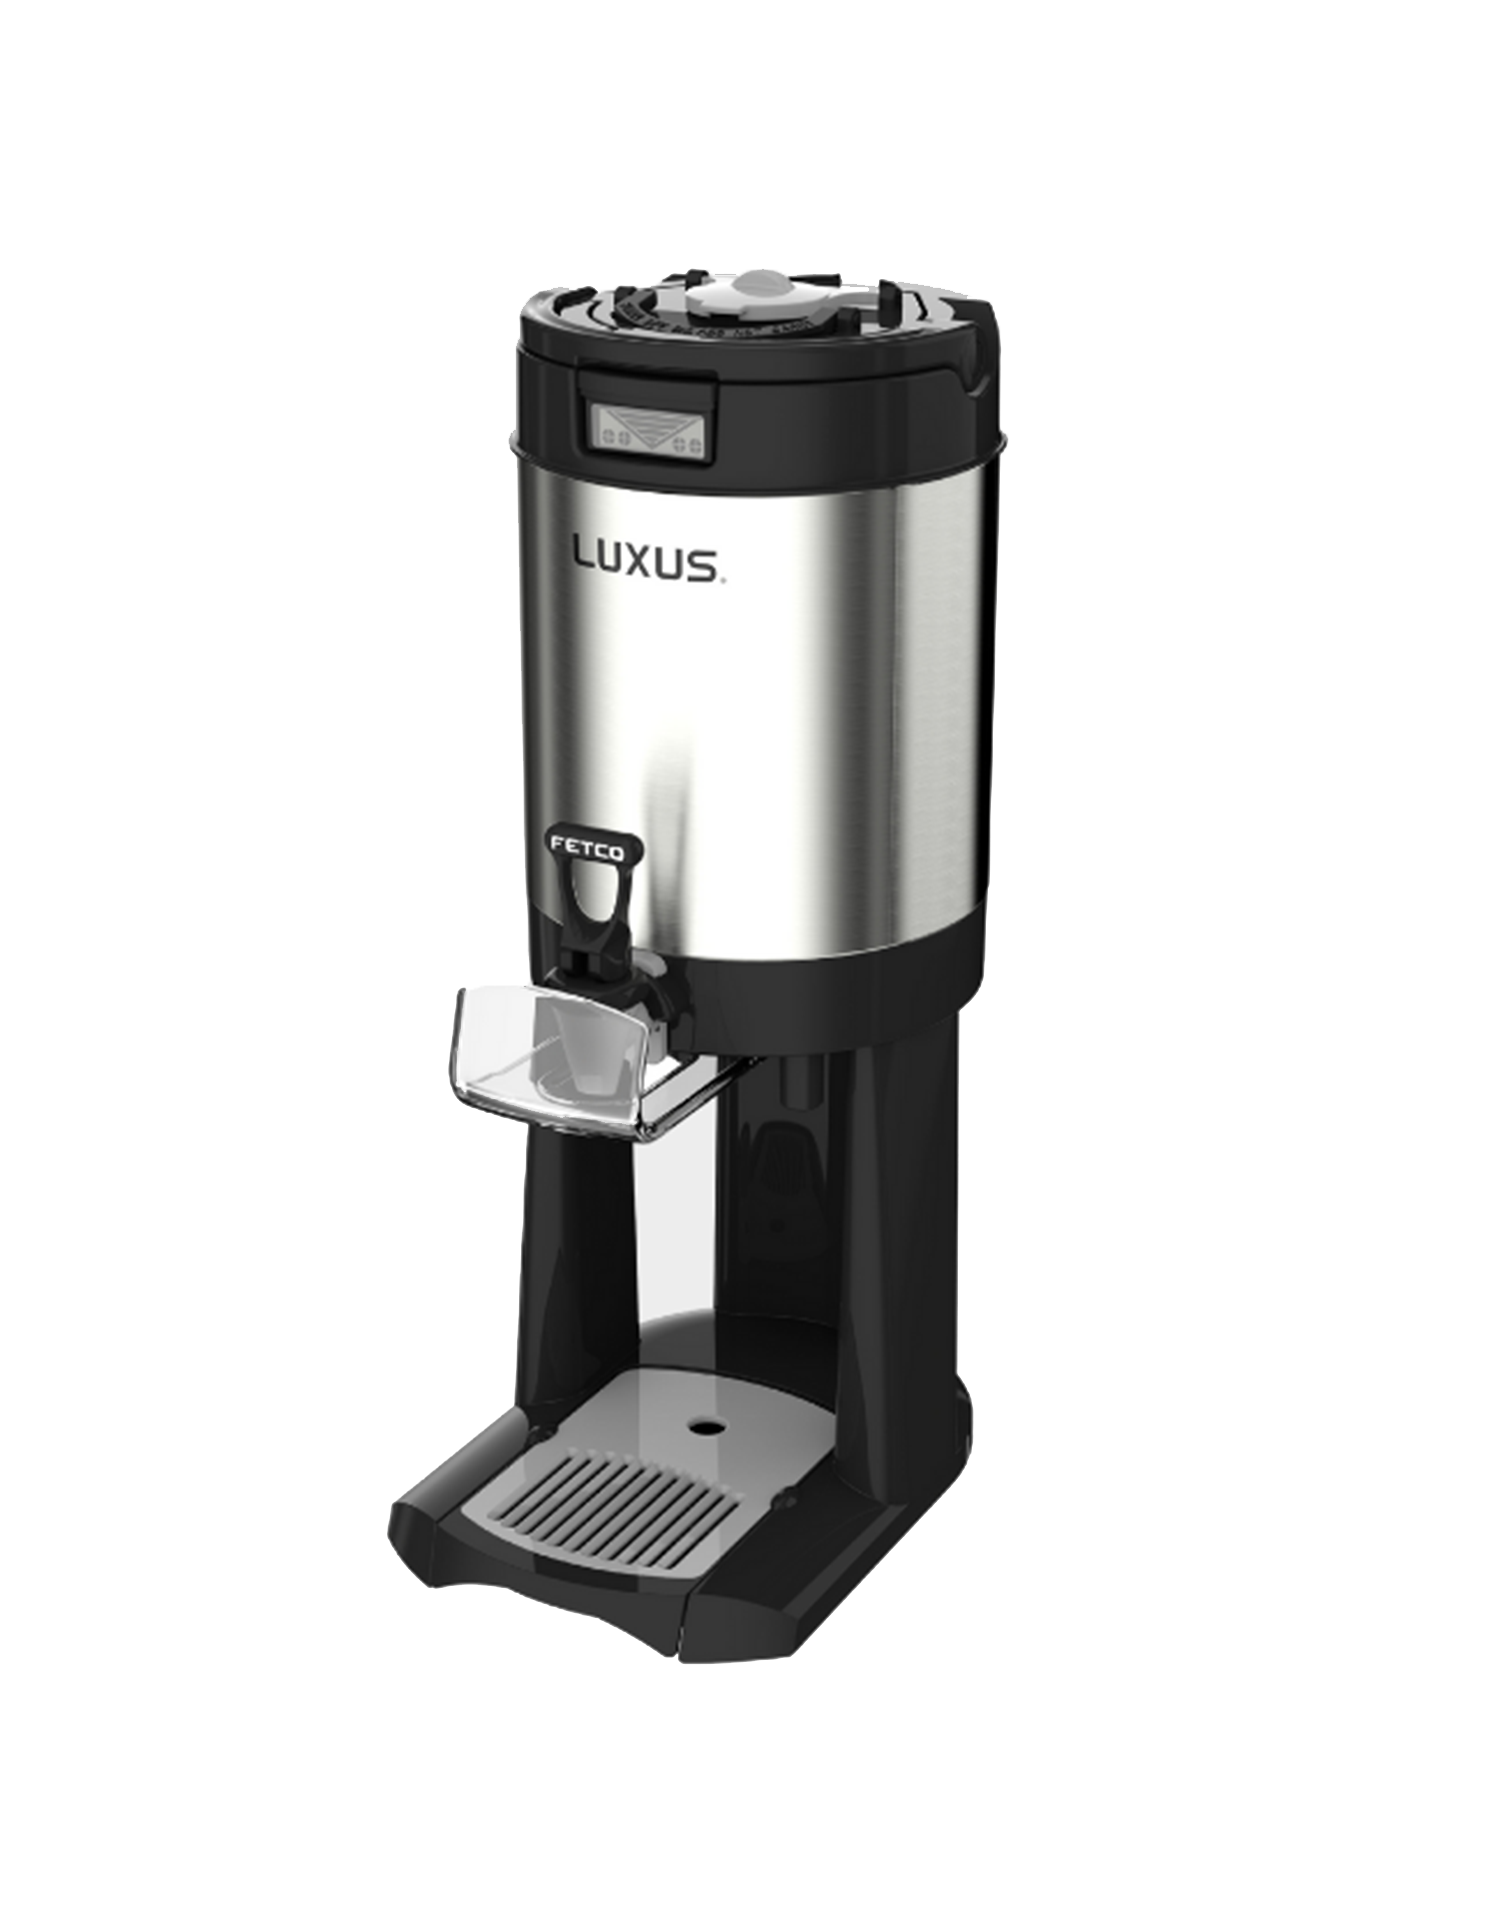 Fetco L4D-10 - Luxus Thermal Dispenser - 1 Gallon